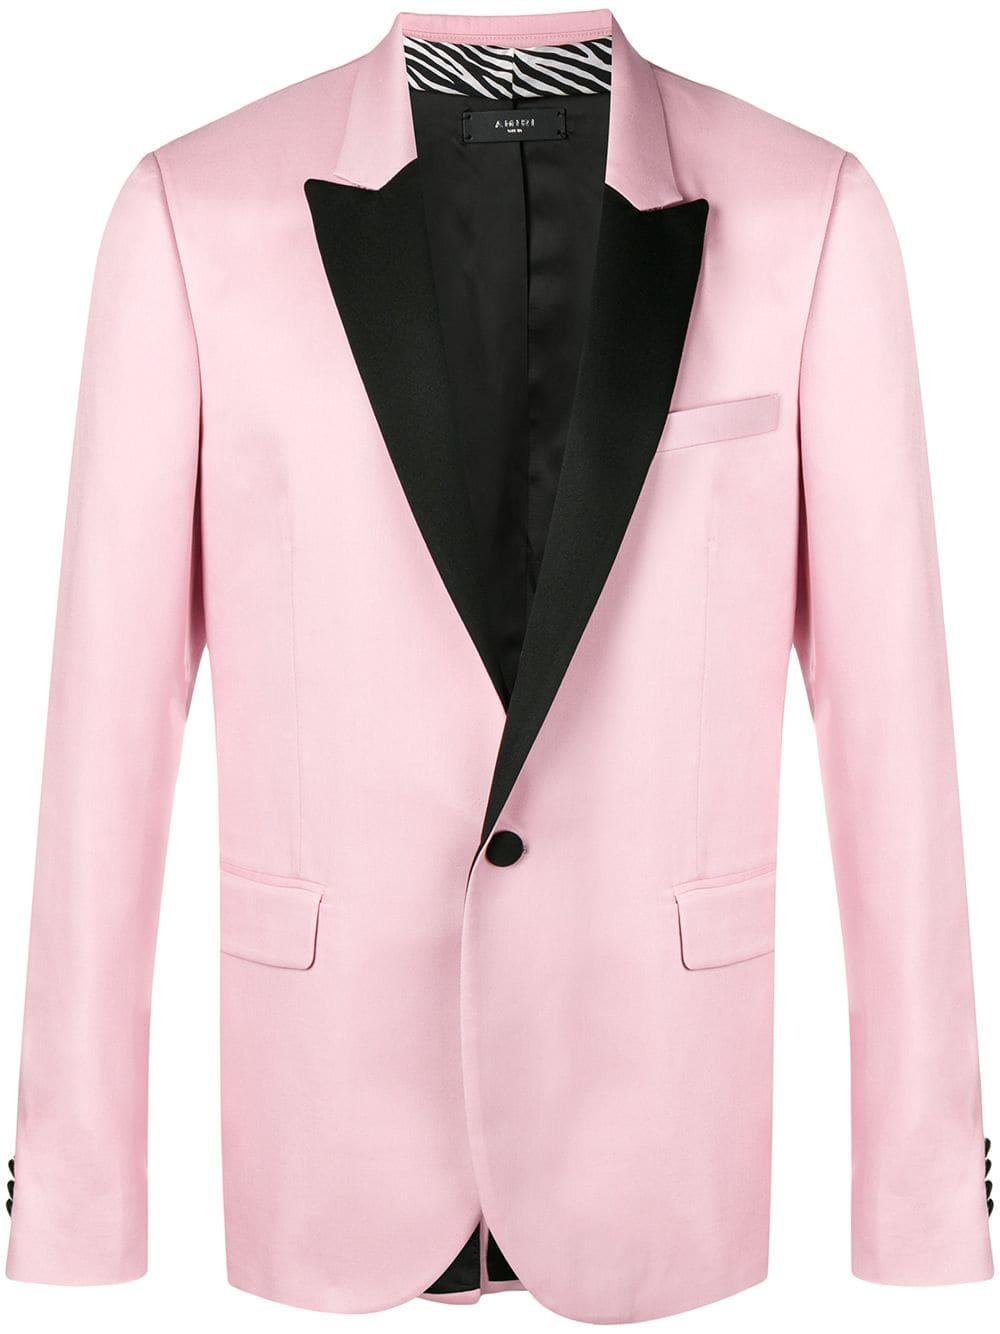 Amiri Satin Suit Jacket in Pink for Men - Lyst